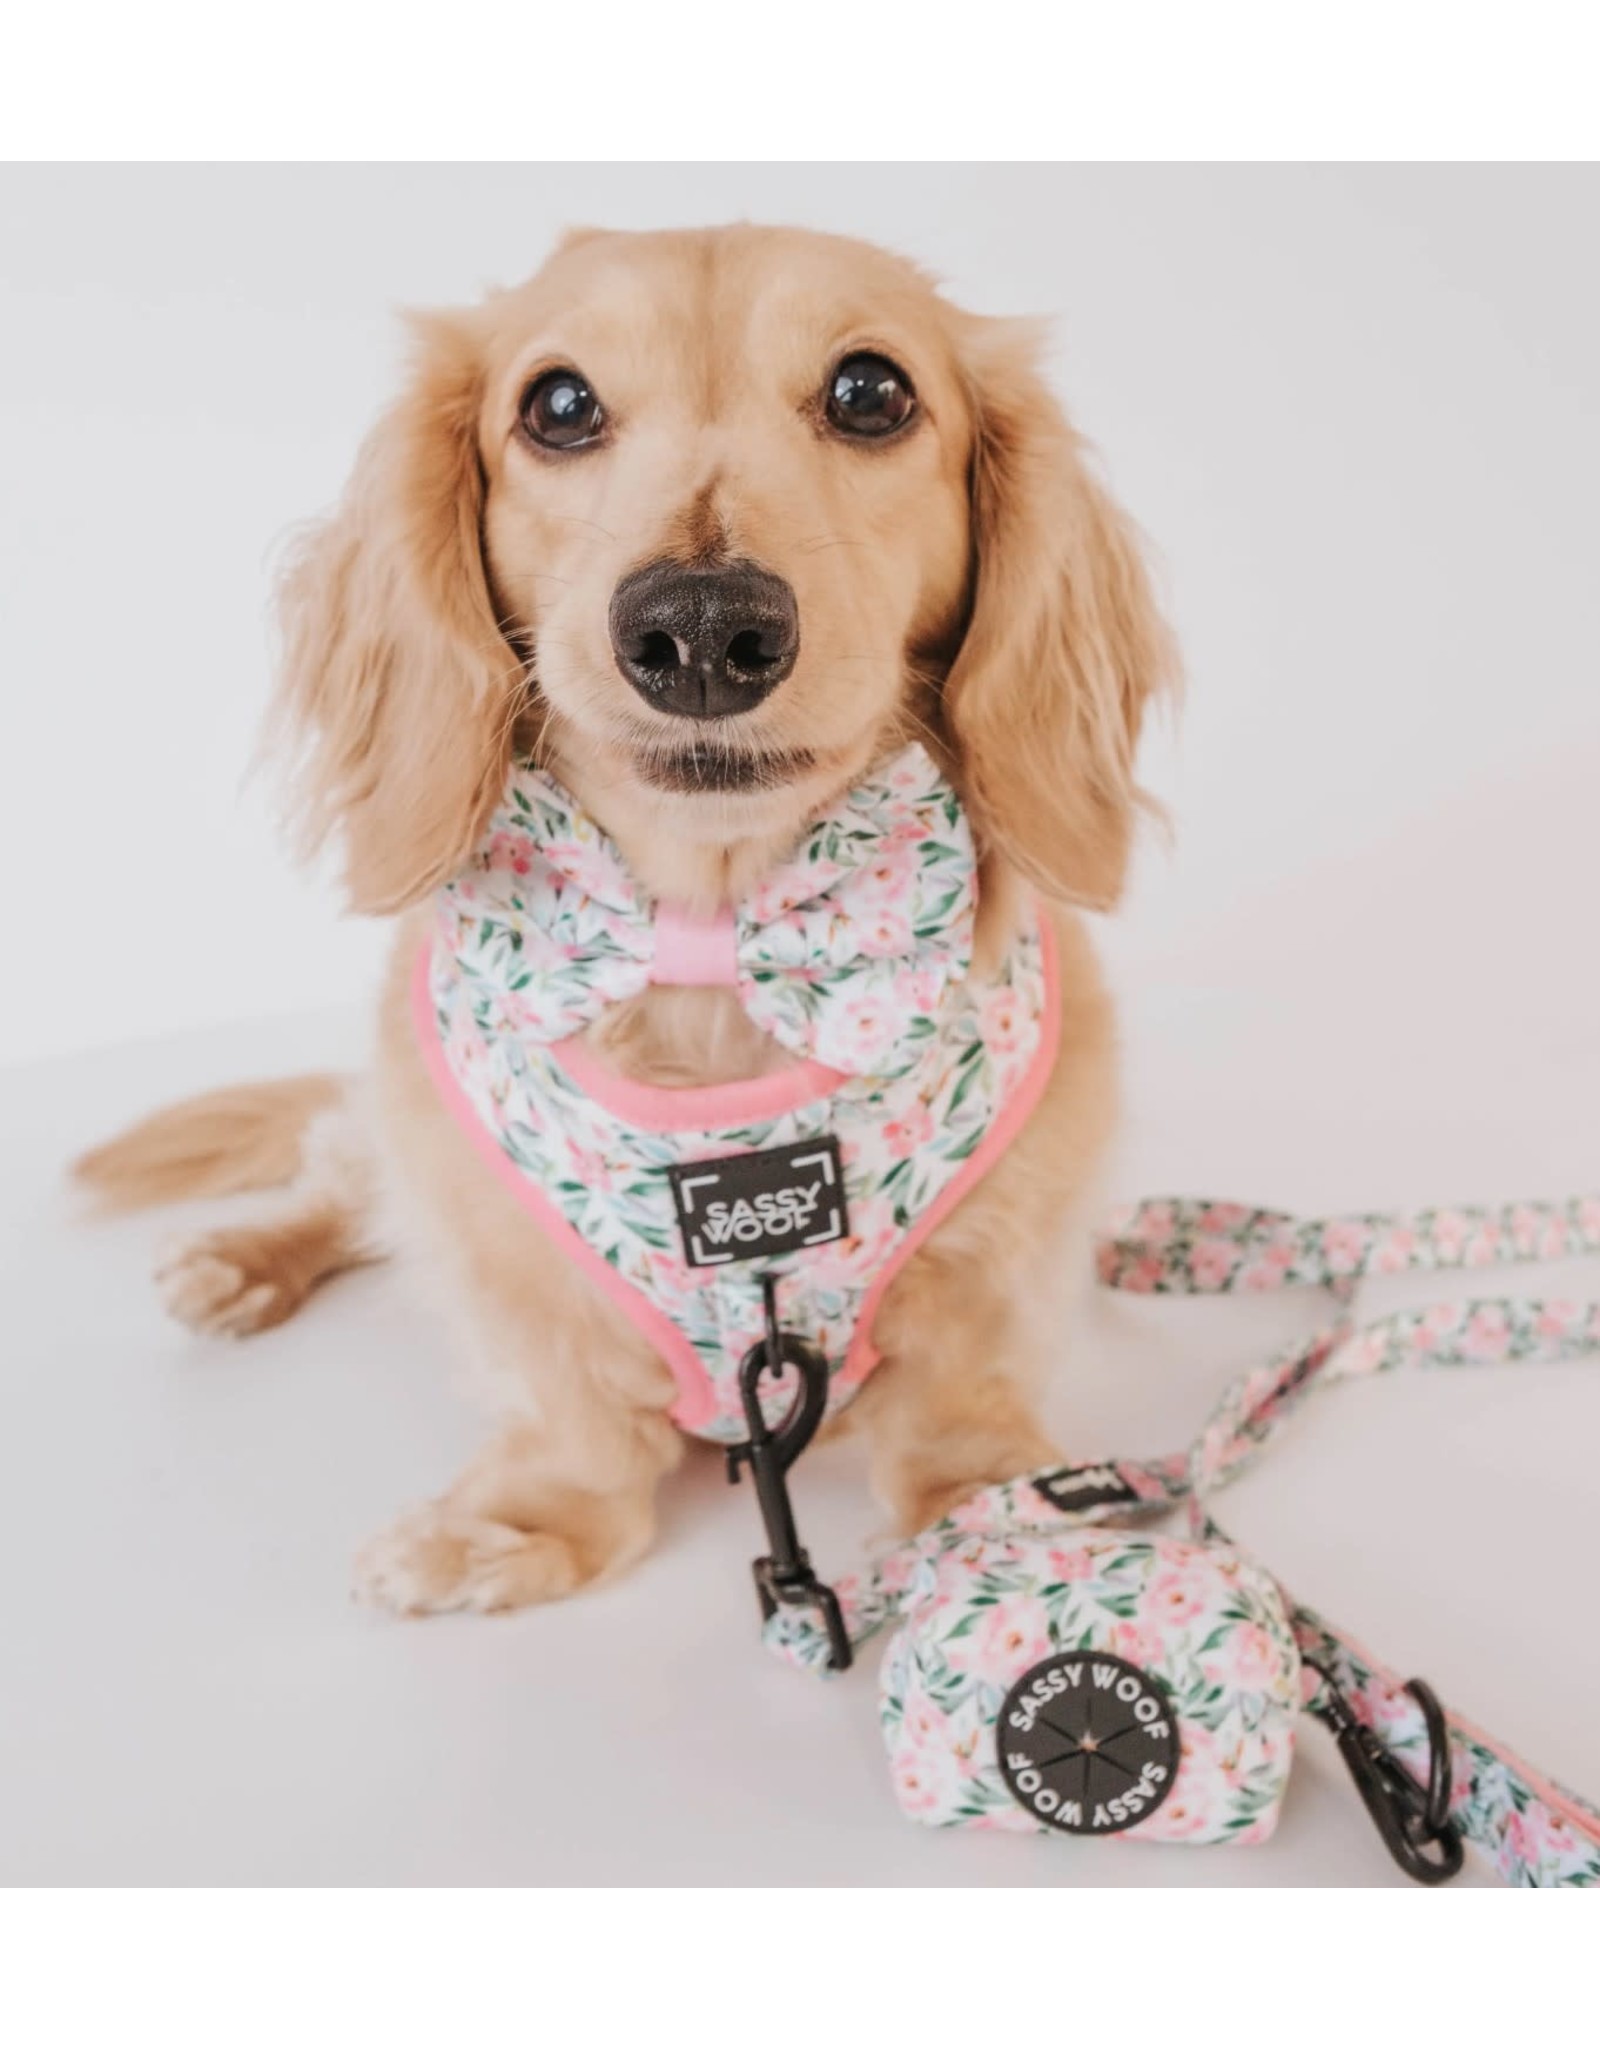 Sassy Woof 'Magnolia' Dog Fabric Leash